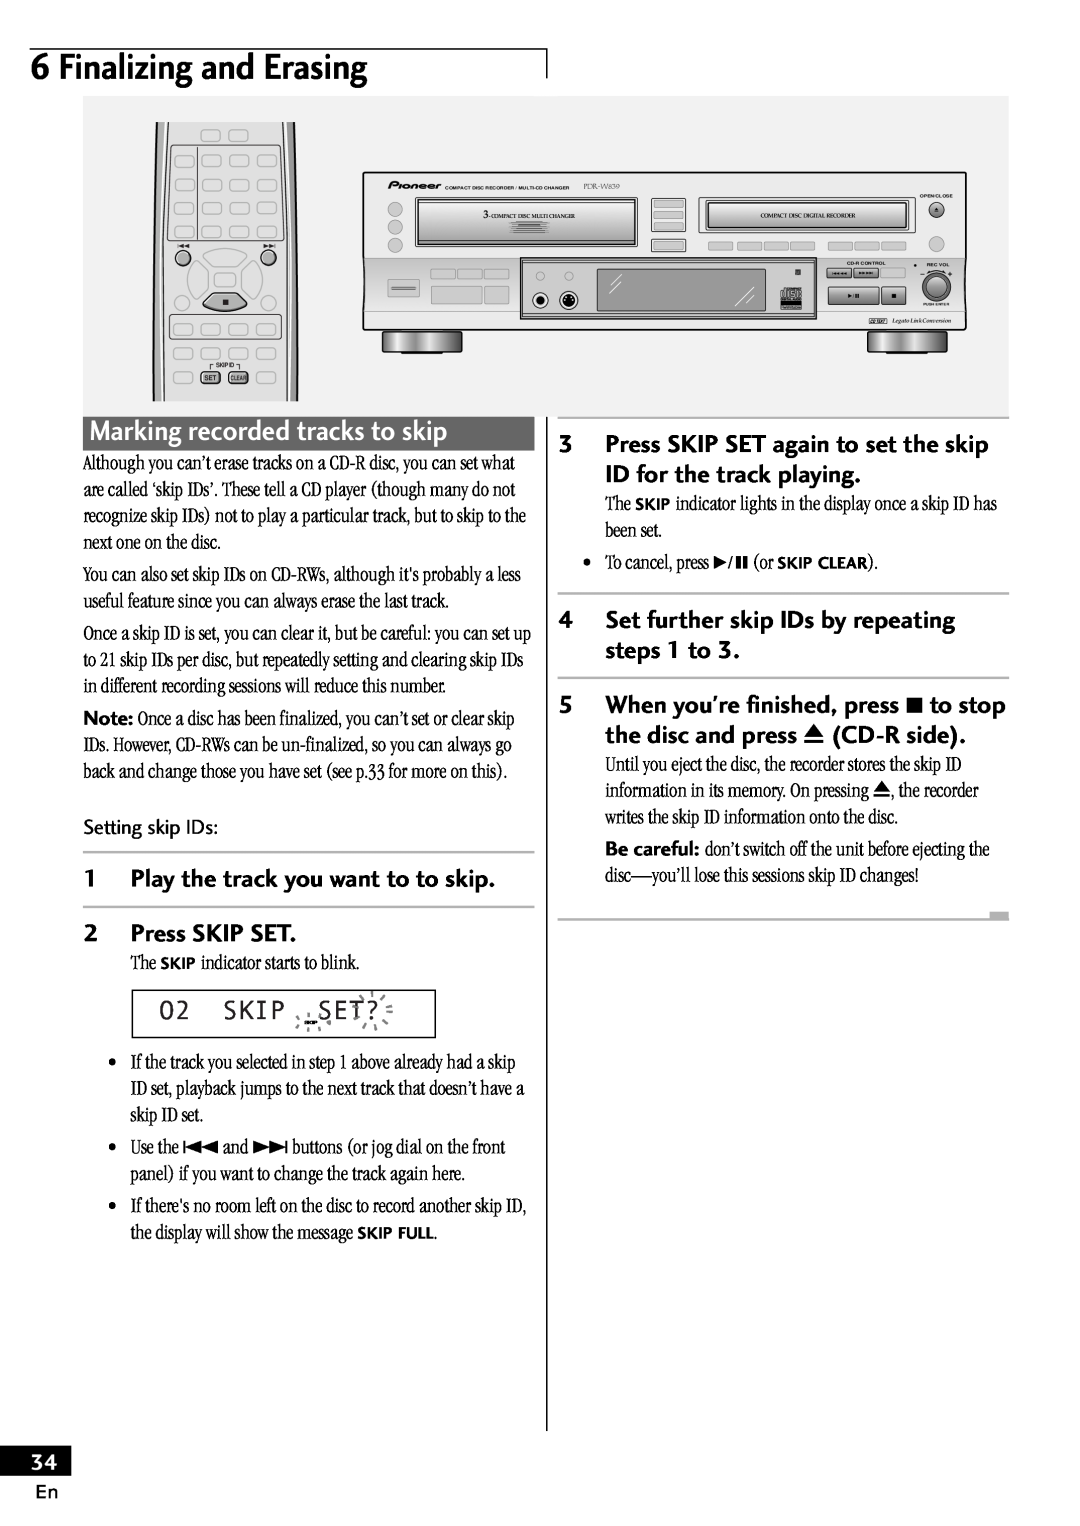 Pioneer PDR-W839 manual Marking recorded tracks to skip, Finalizing and Erasing, O2 SKIP SET?, 2Press SKIP SET 